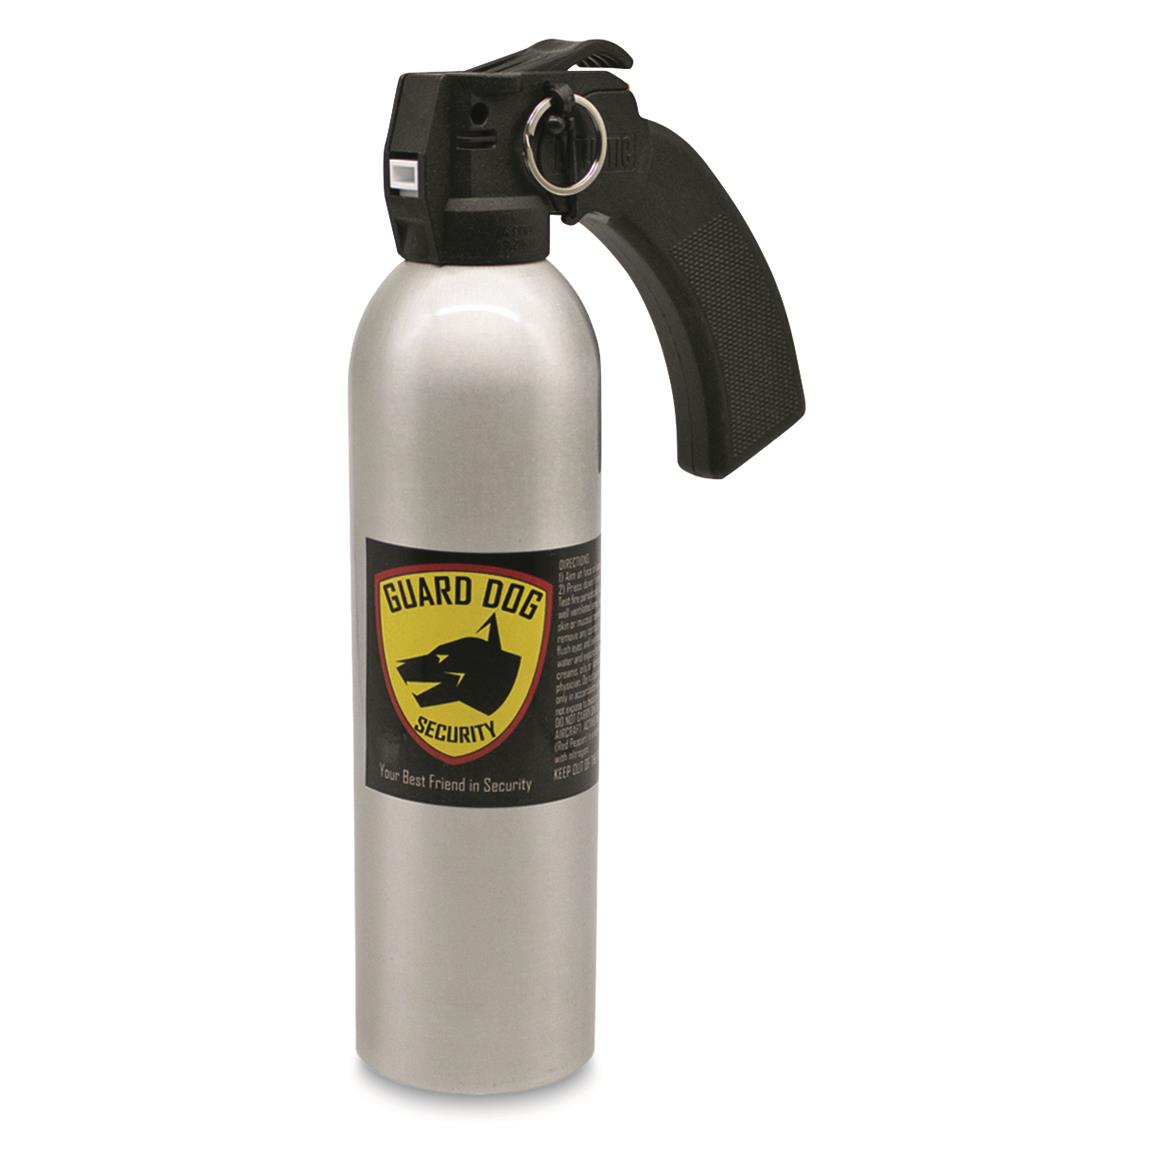 Guard Dog Security 24 Oz. Pistol Grip Pepper Spray